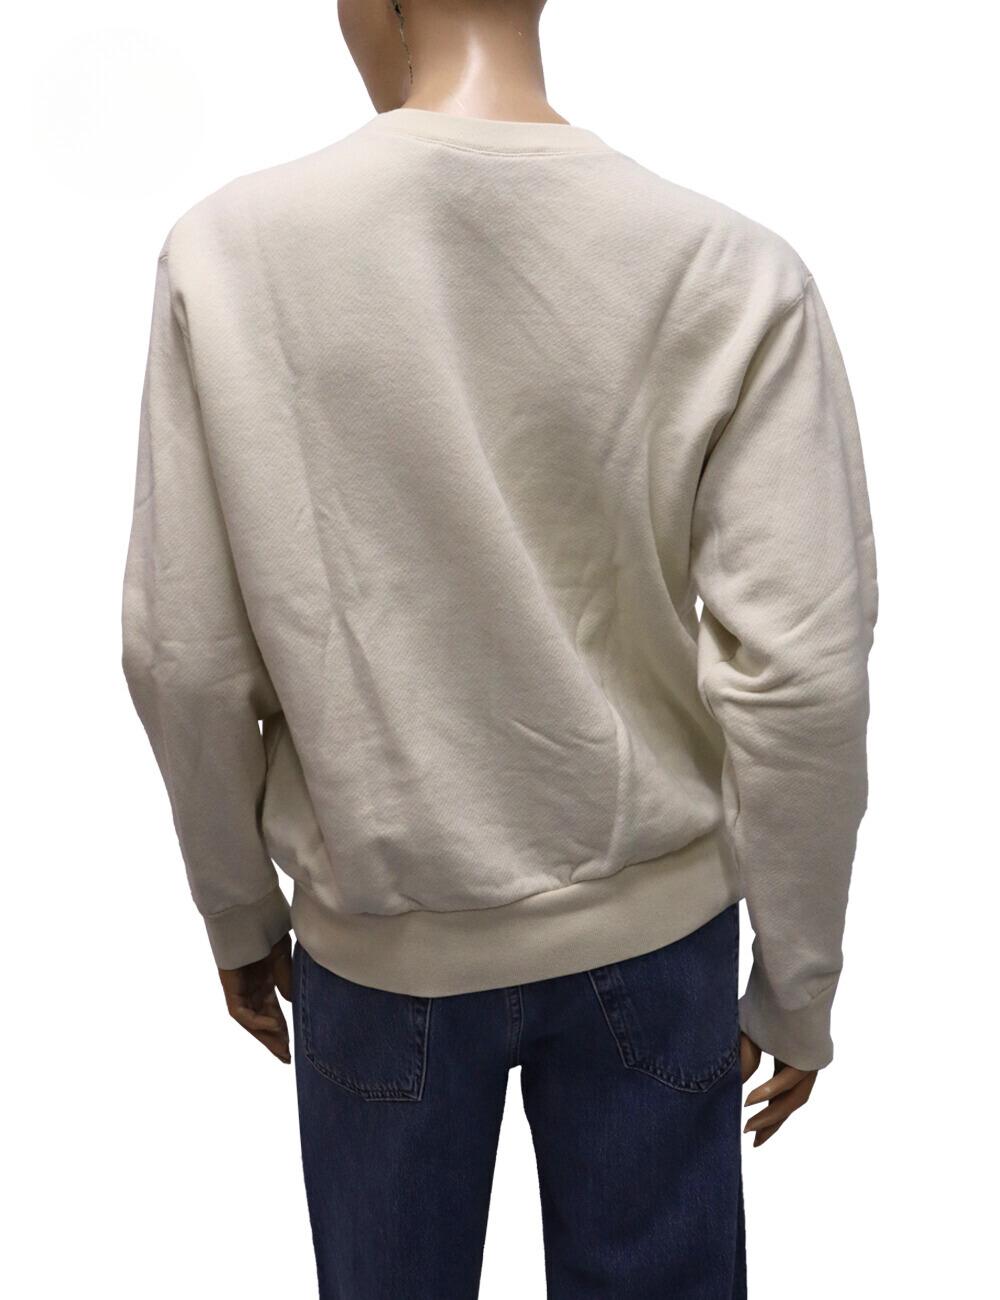 Gucci Off-White Interlocking G Sweatshirt Size XS In Good Condition For Sale In Amman, JO